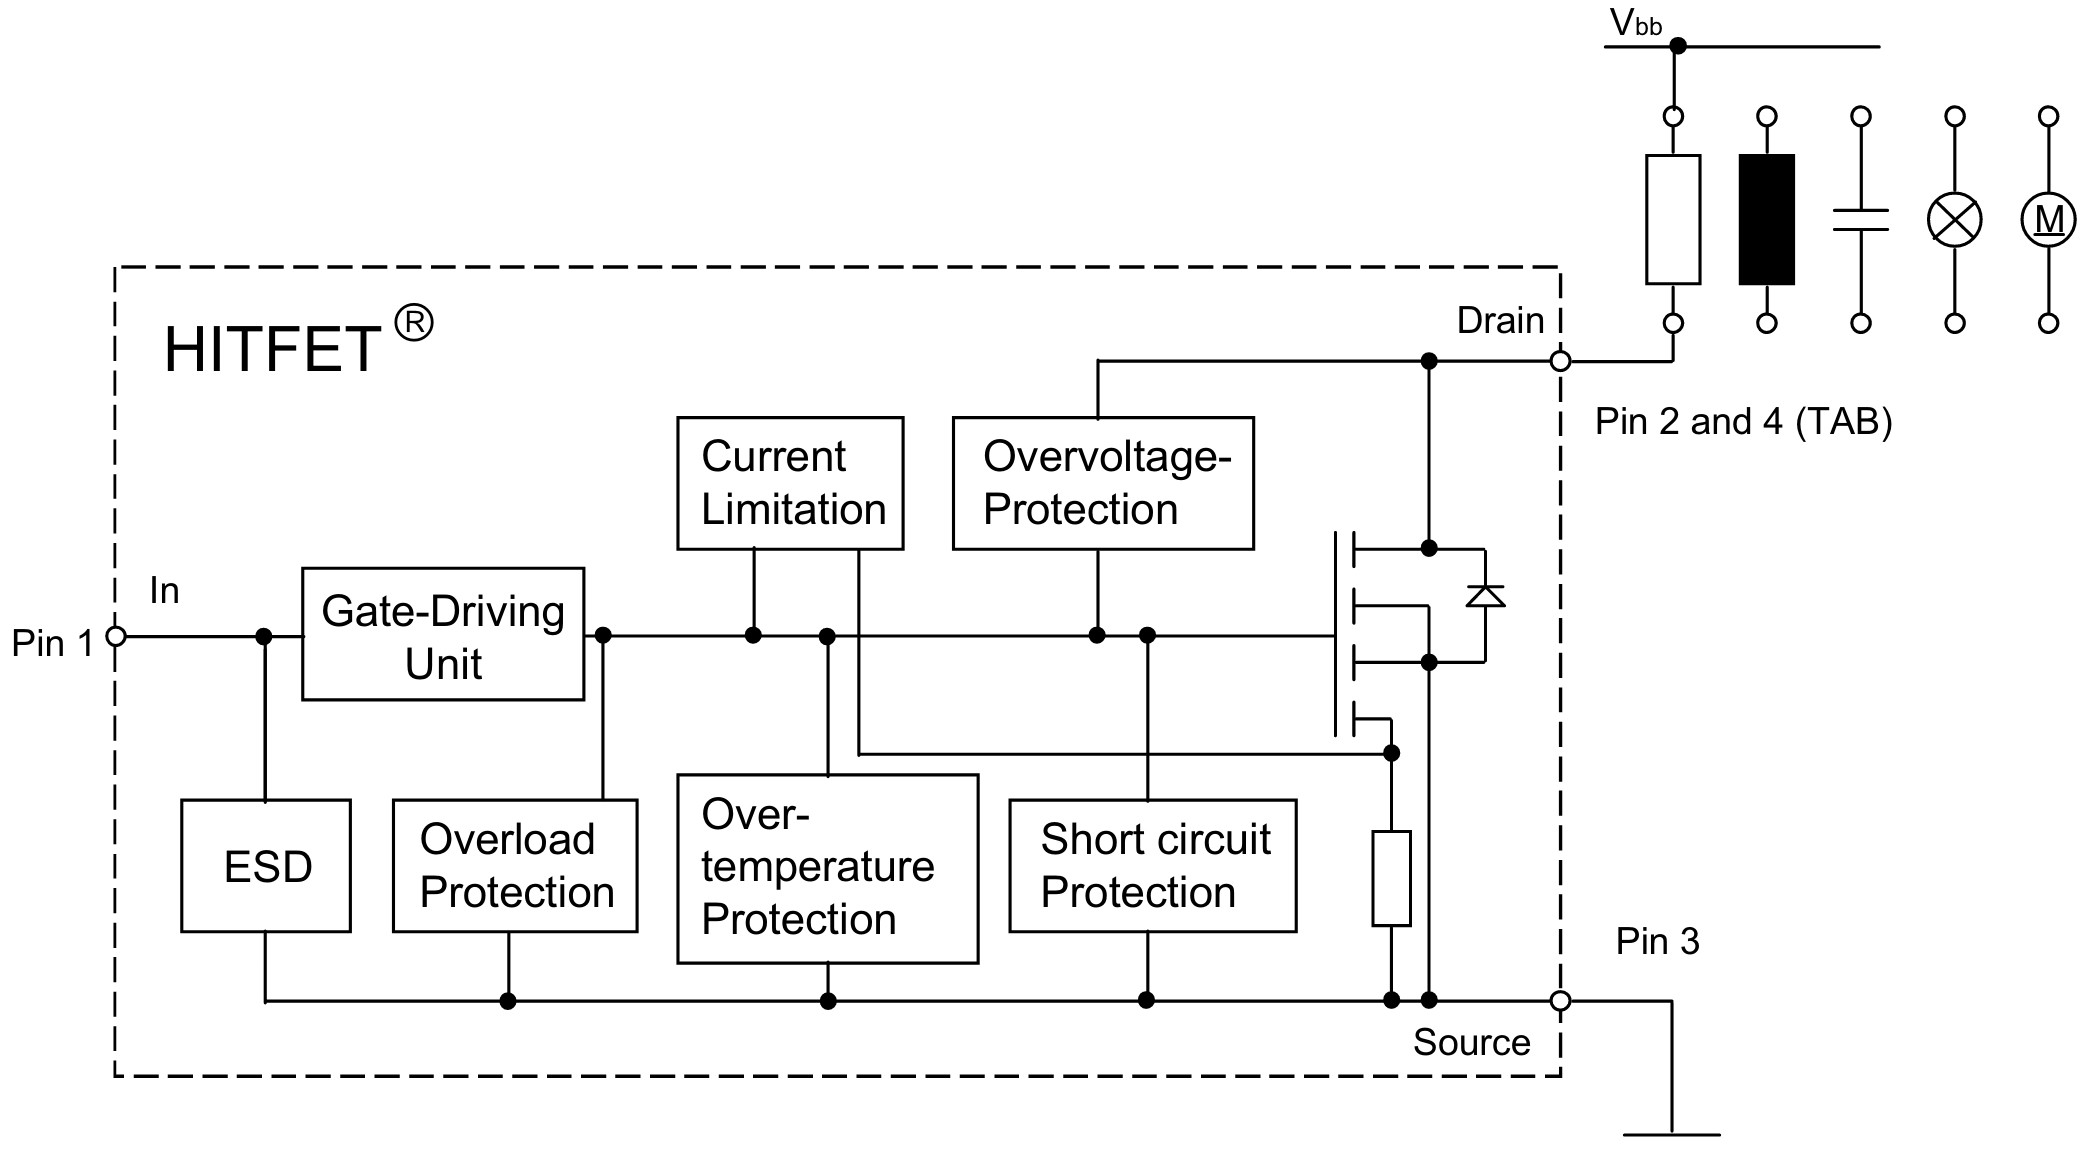 Internal structure of the BSP76 (source: Infineon datasheet).